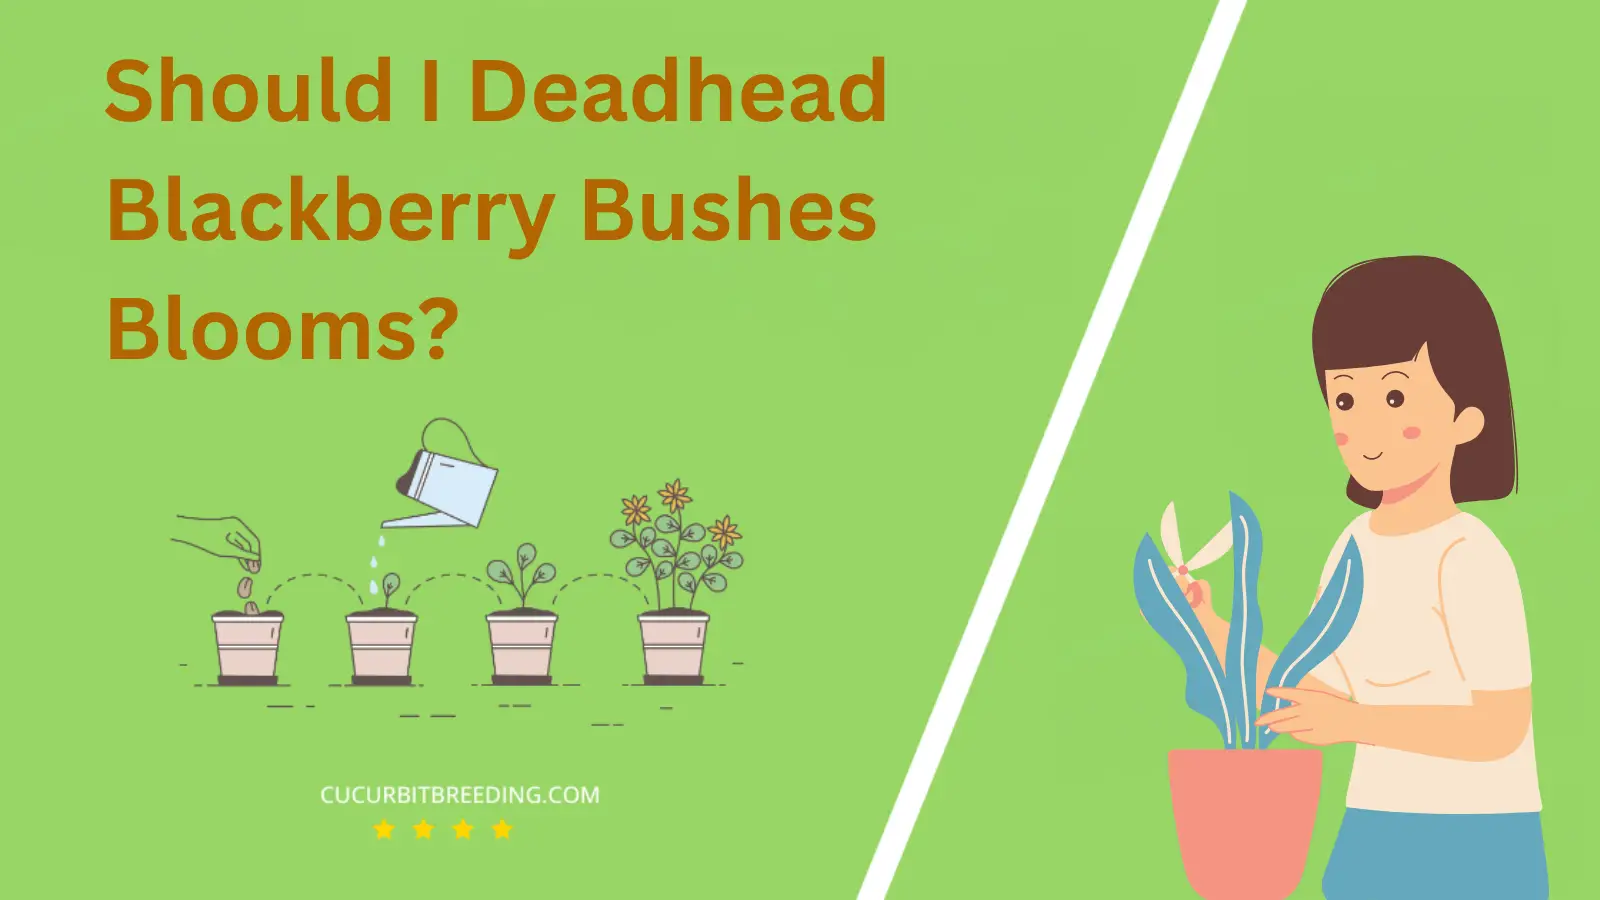 Should I Deadhead Blackberry Bushes Blooms?